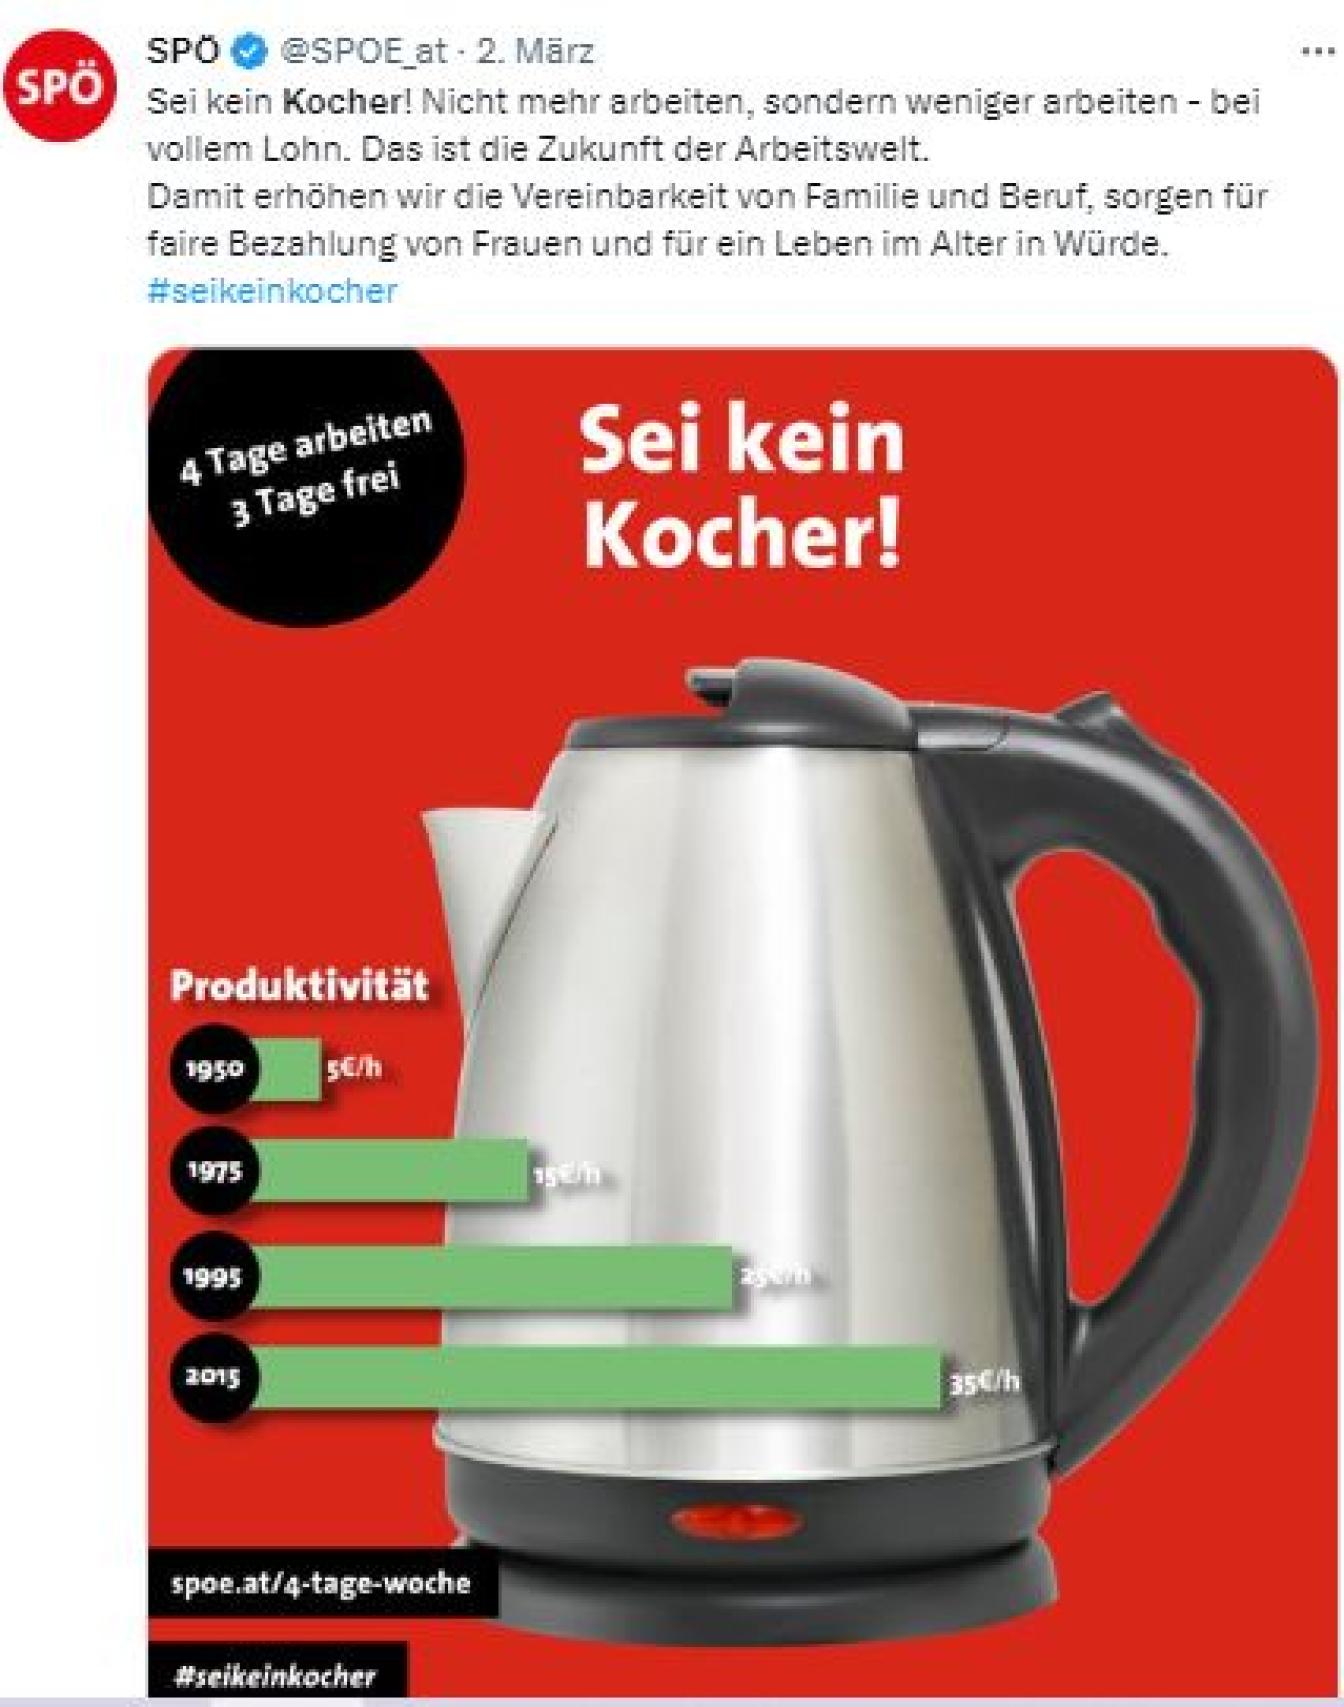 SPÖ-Sujet mit Wasserkocher